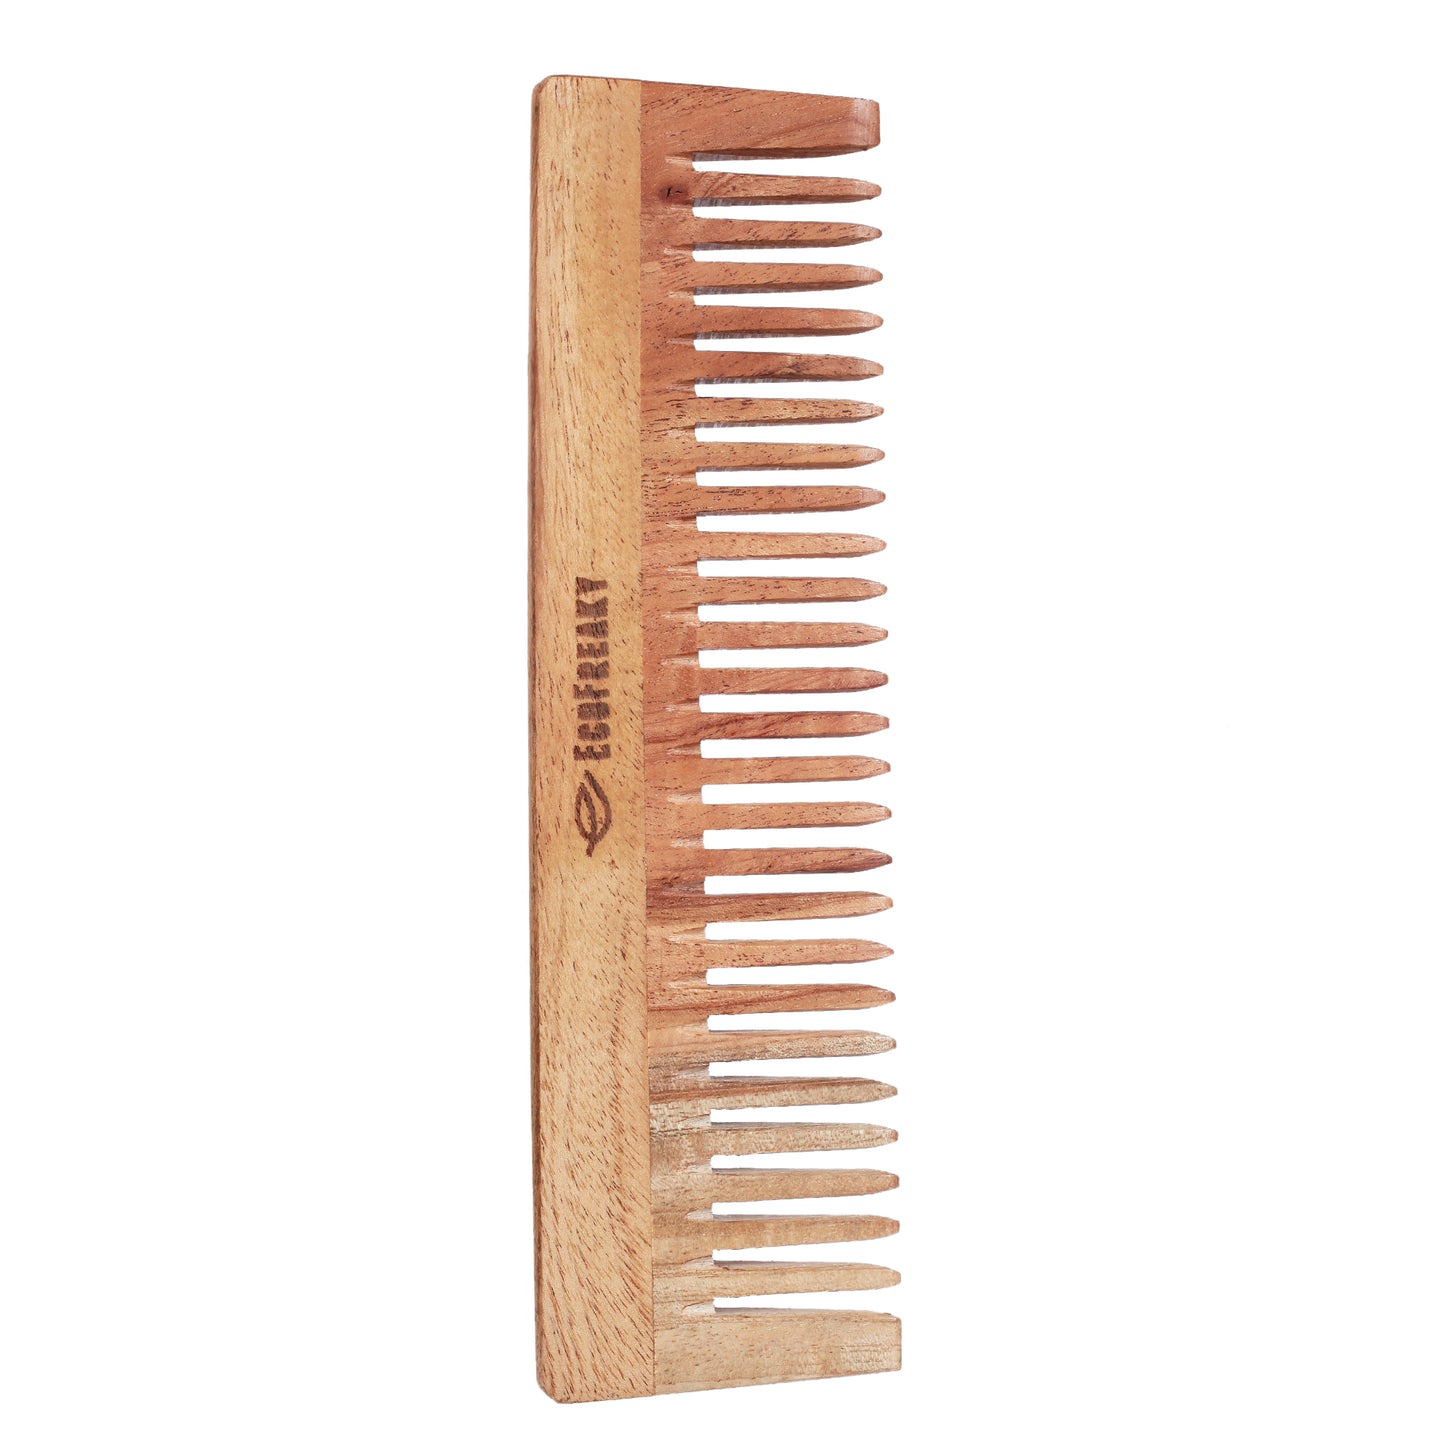 Pure Neem Wood Widetooth Comb | Antibacterial Wooden Comb